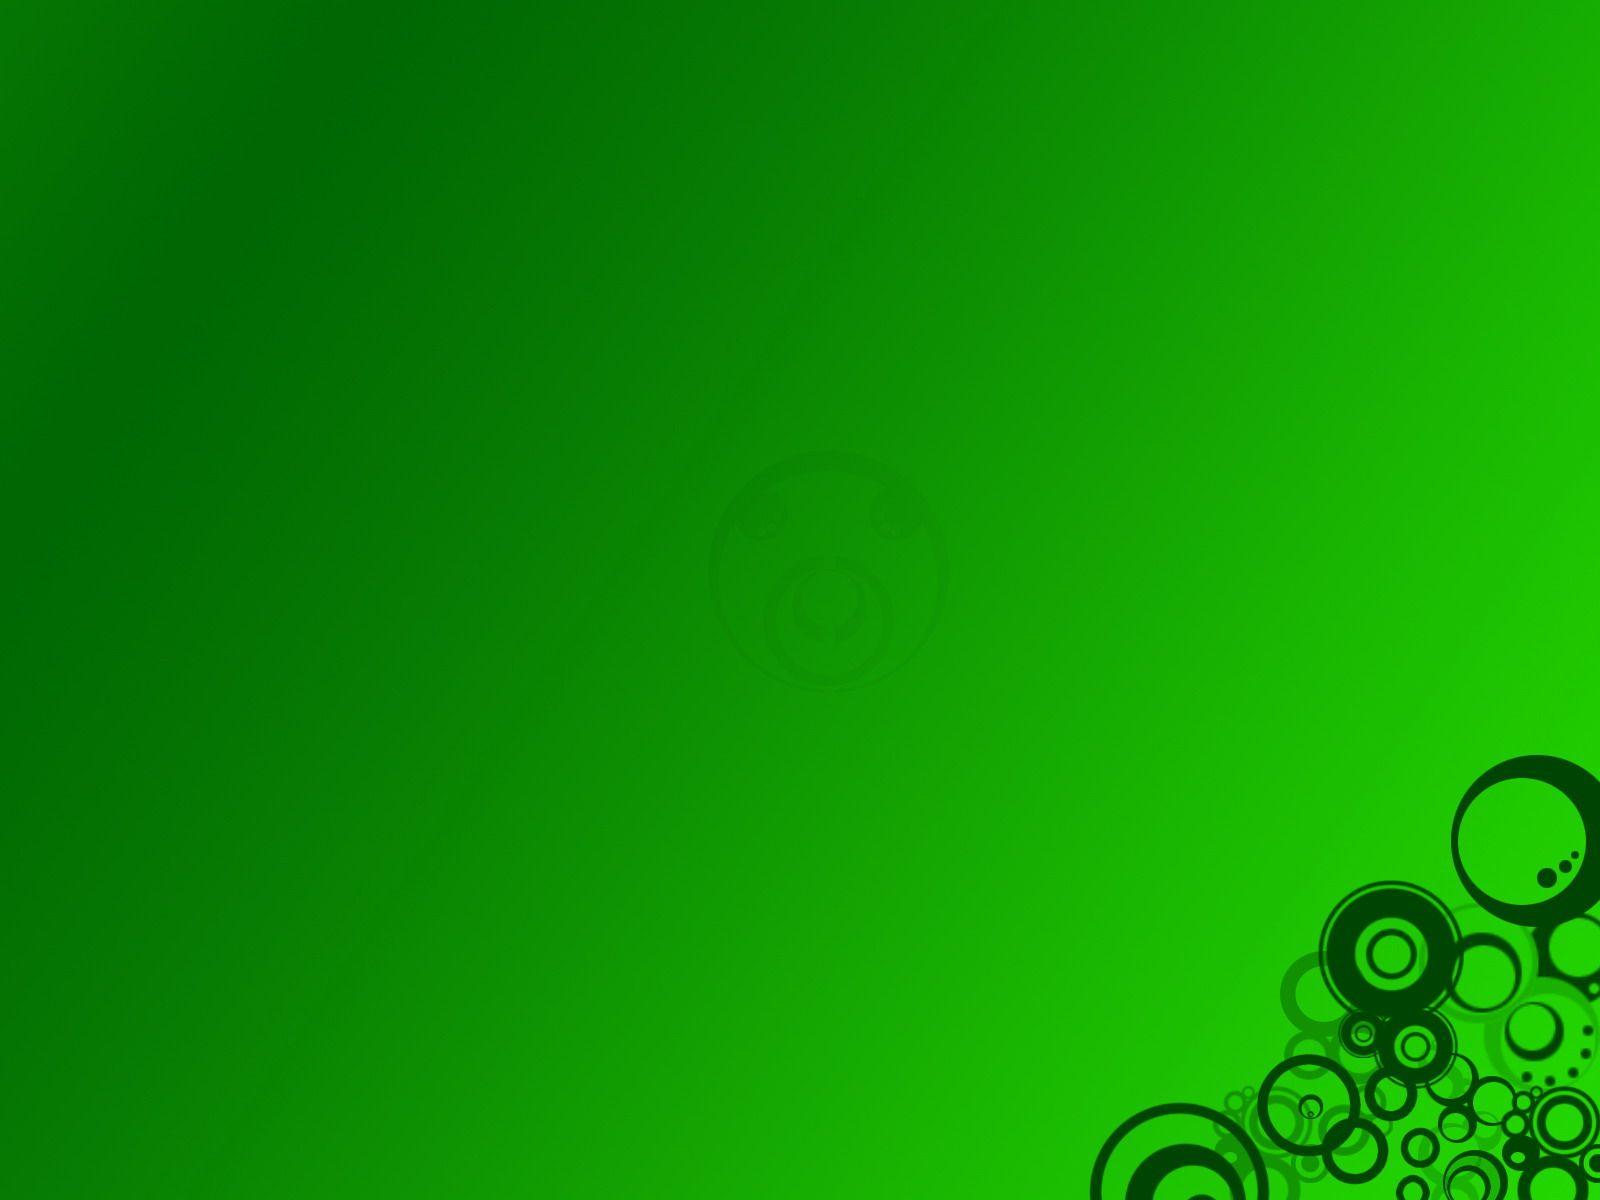 Green Wallpaper, Mobile Compatible Green Wallpaper, Green Free